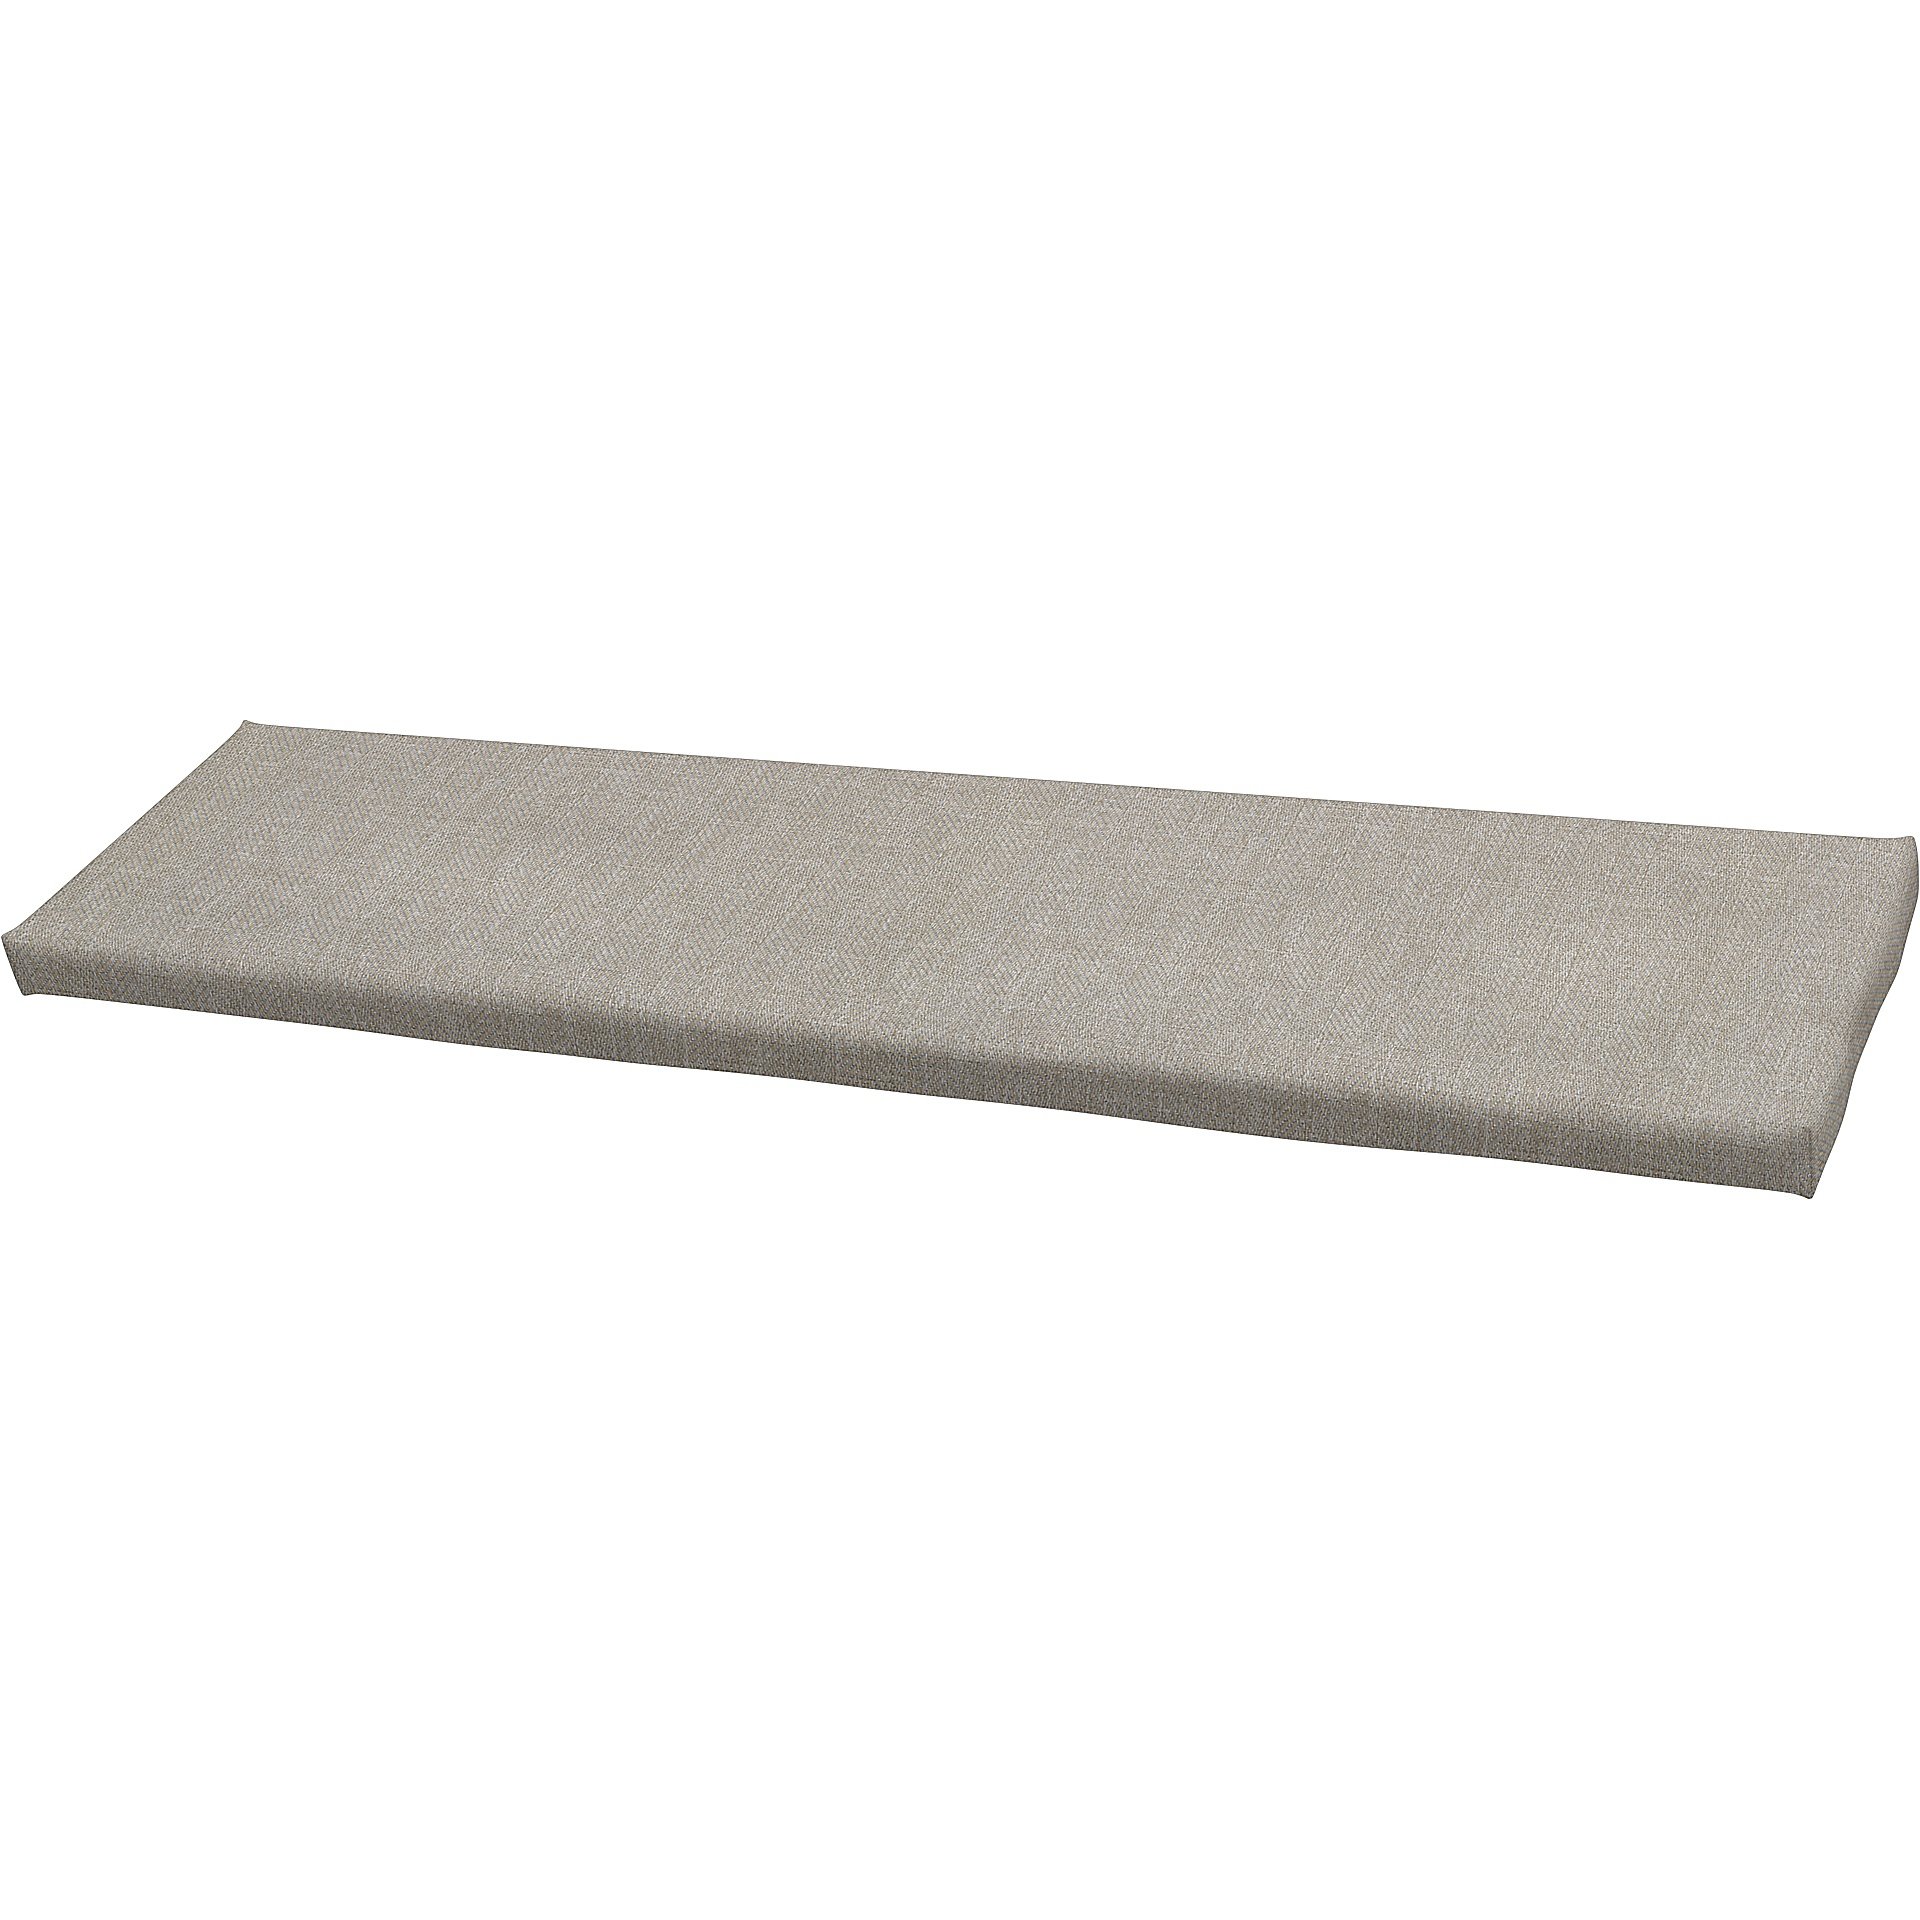 IKEA - Universal bench cushion cover 120x35x3,5 cm, Greige, Boucle & Texture - Bemz